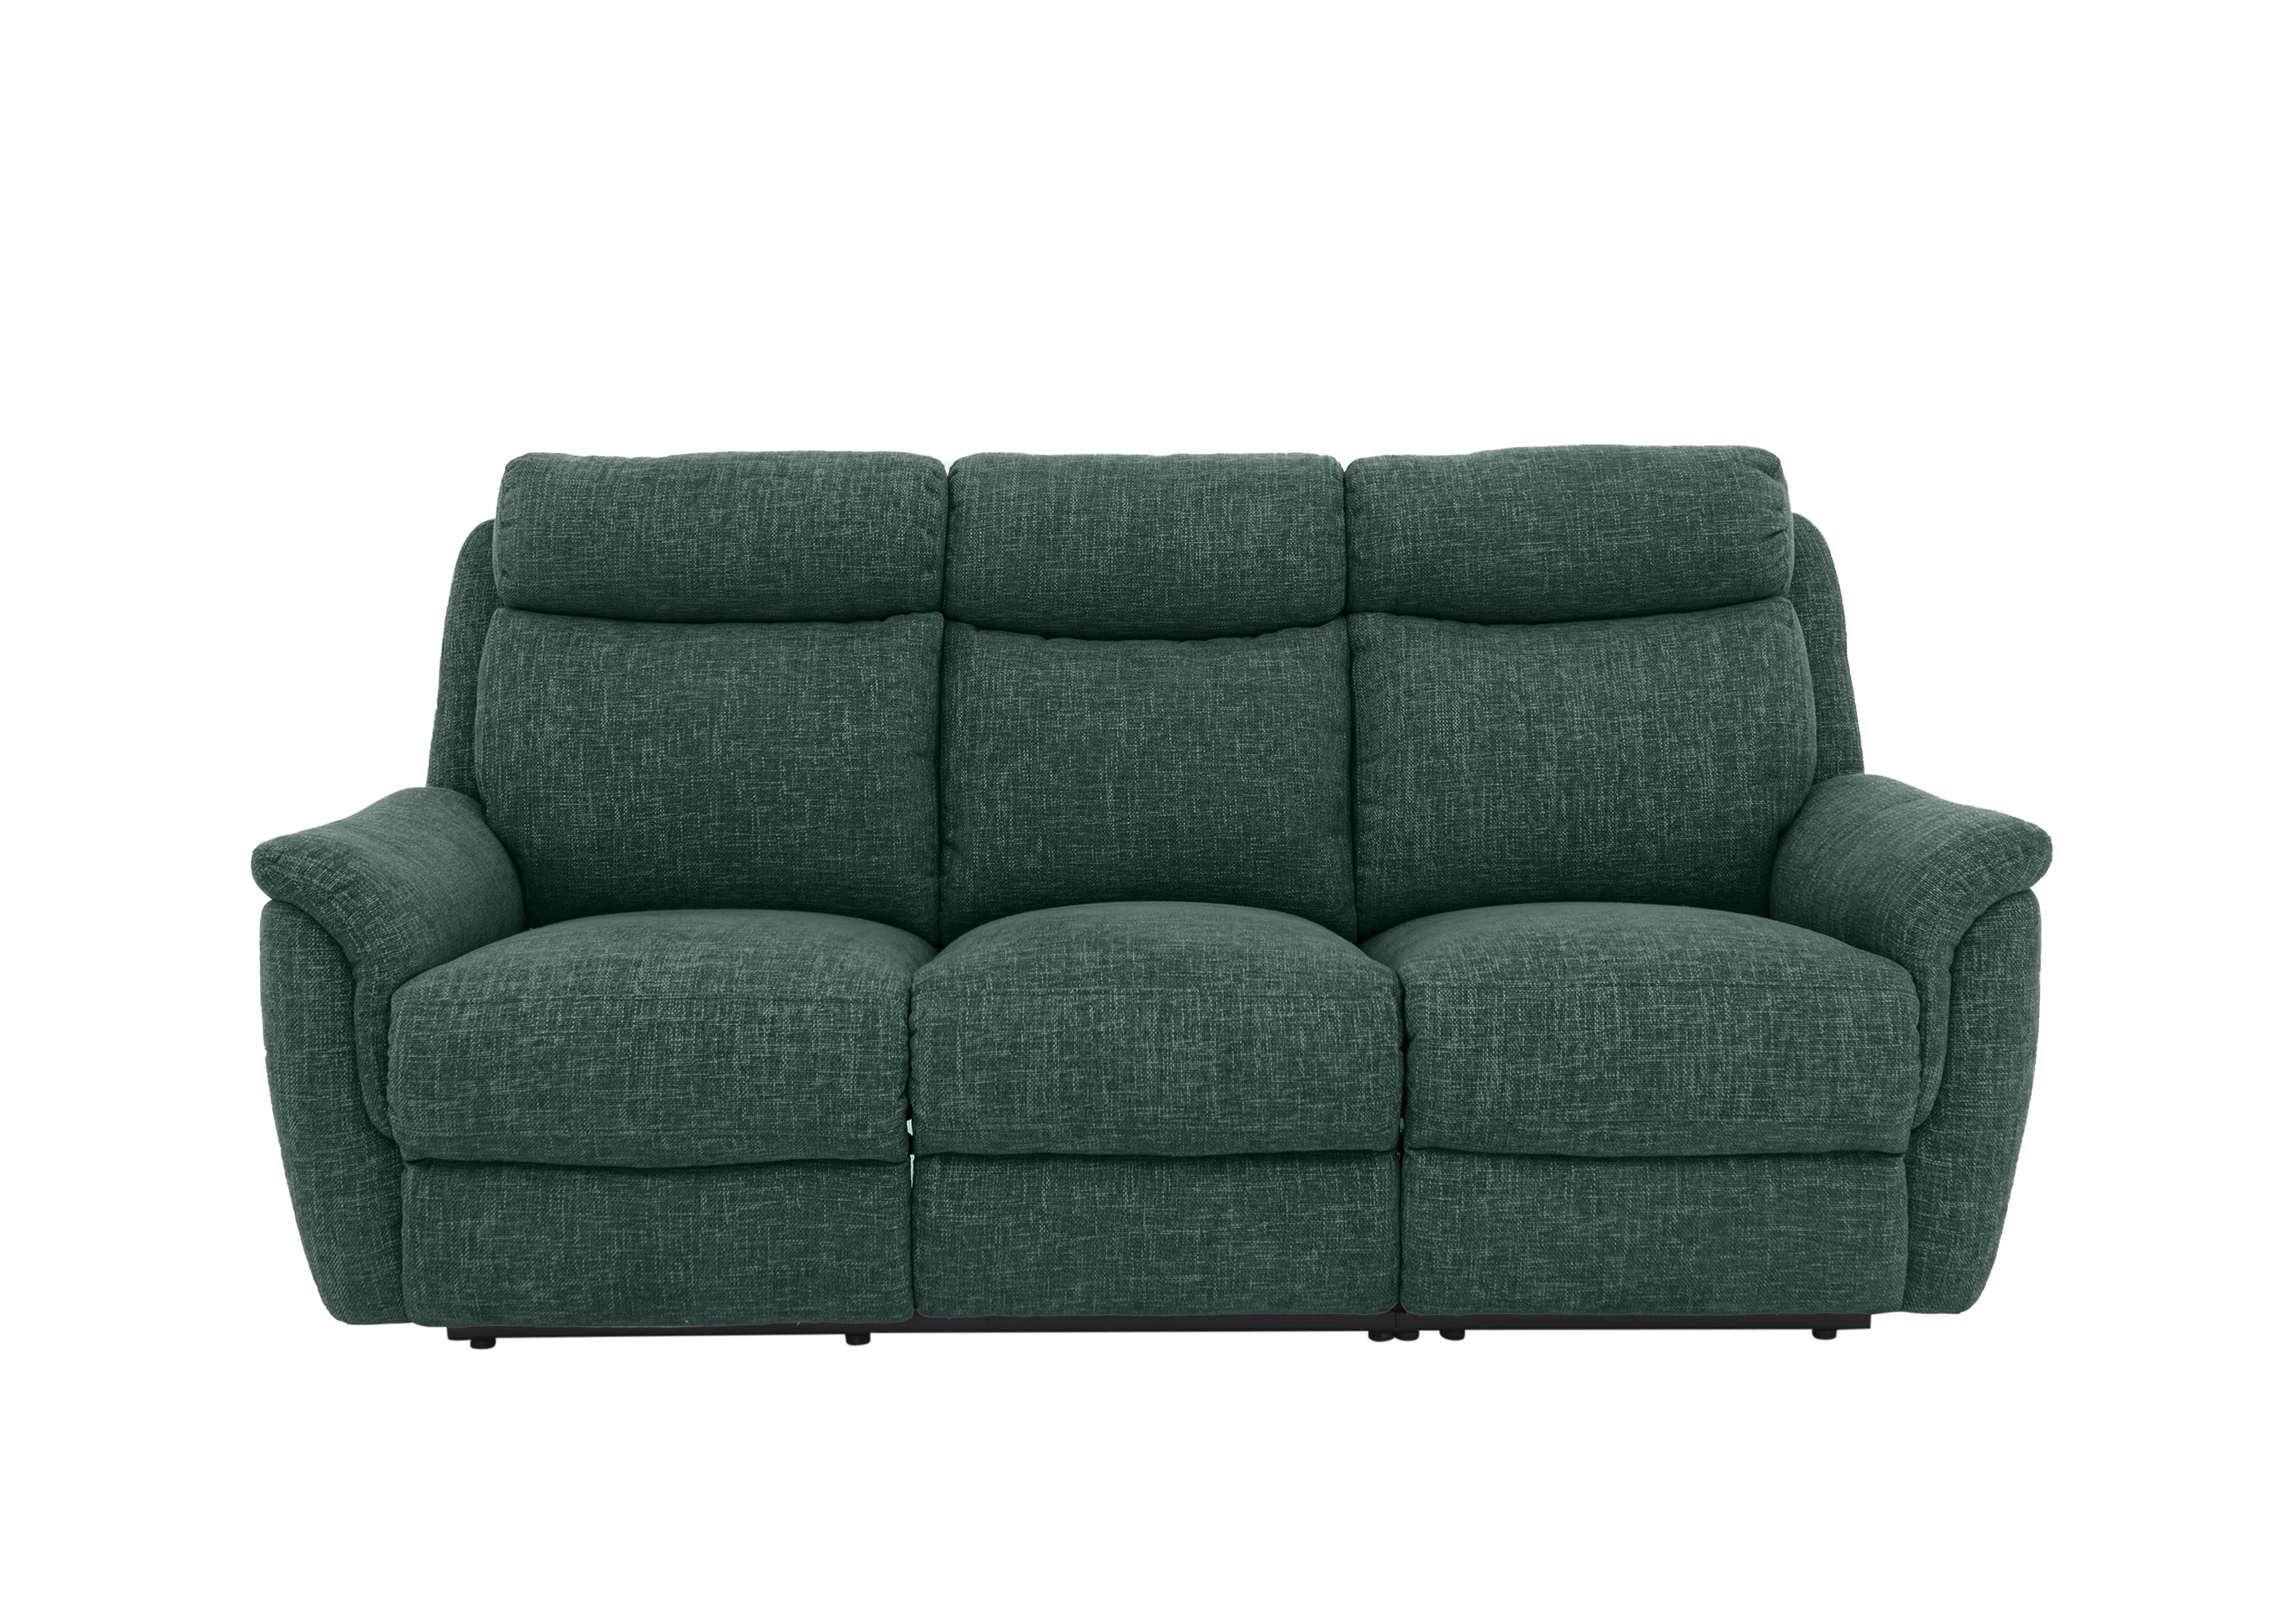 Orlando 3 Seater Fabric Sofa in Anivia Green 19445 on Furniture Village